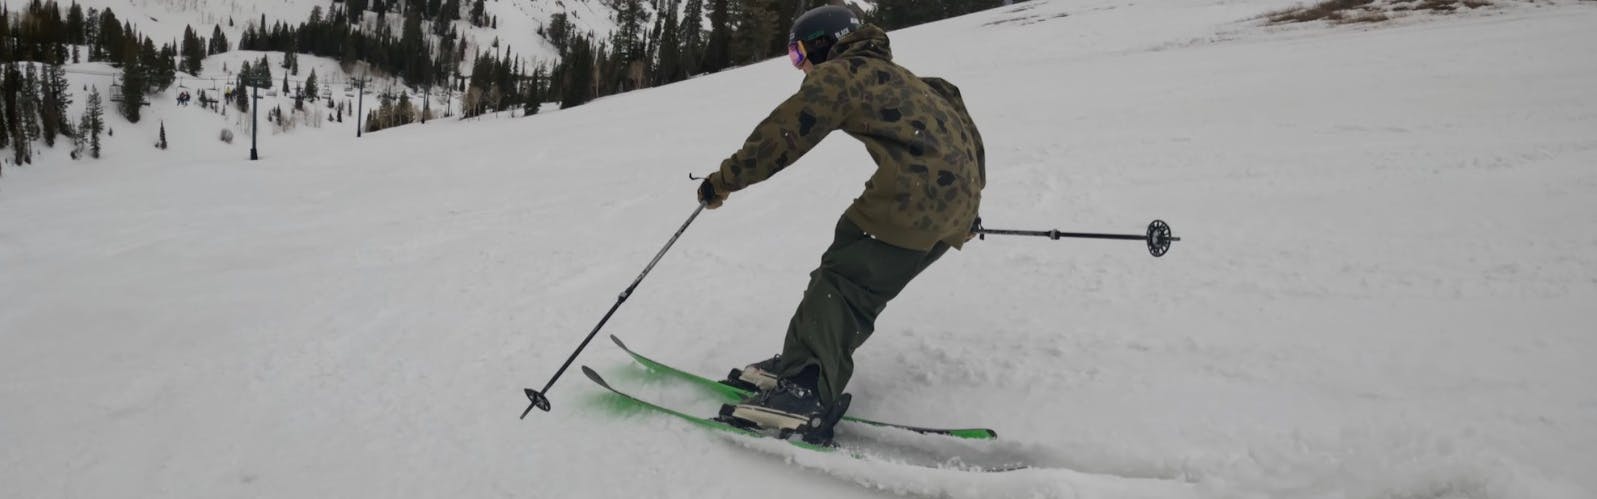 Curated Ski Expert Brandon Westburg skiing on the 2023 Line Blade Optic 104 skis at Powder Mountain